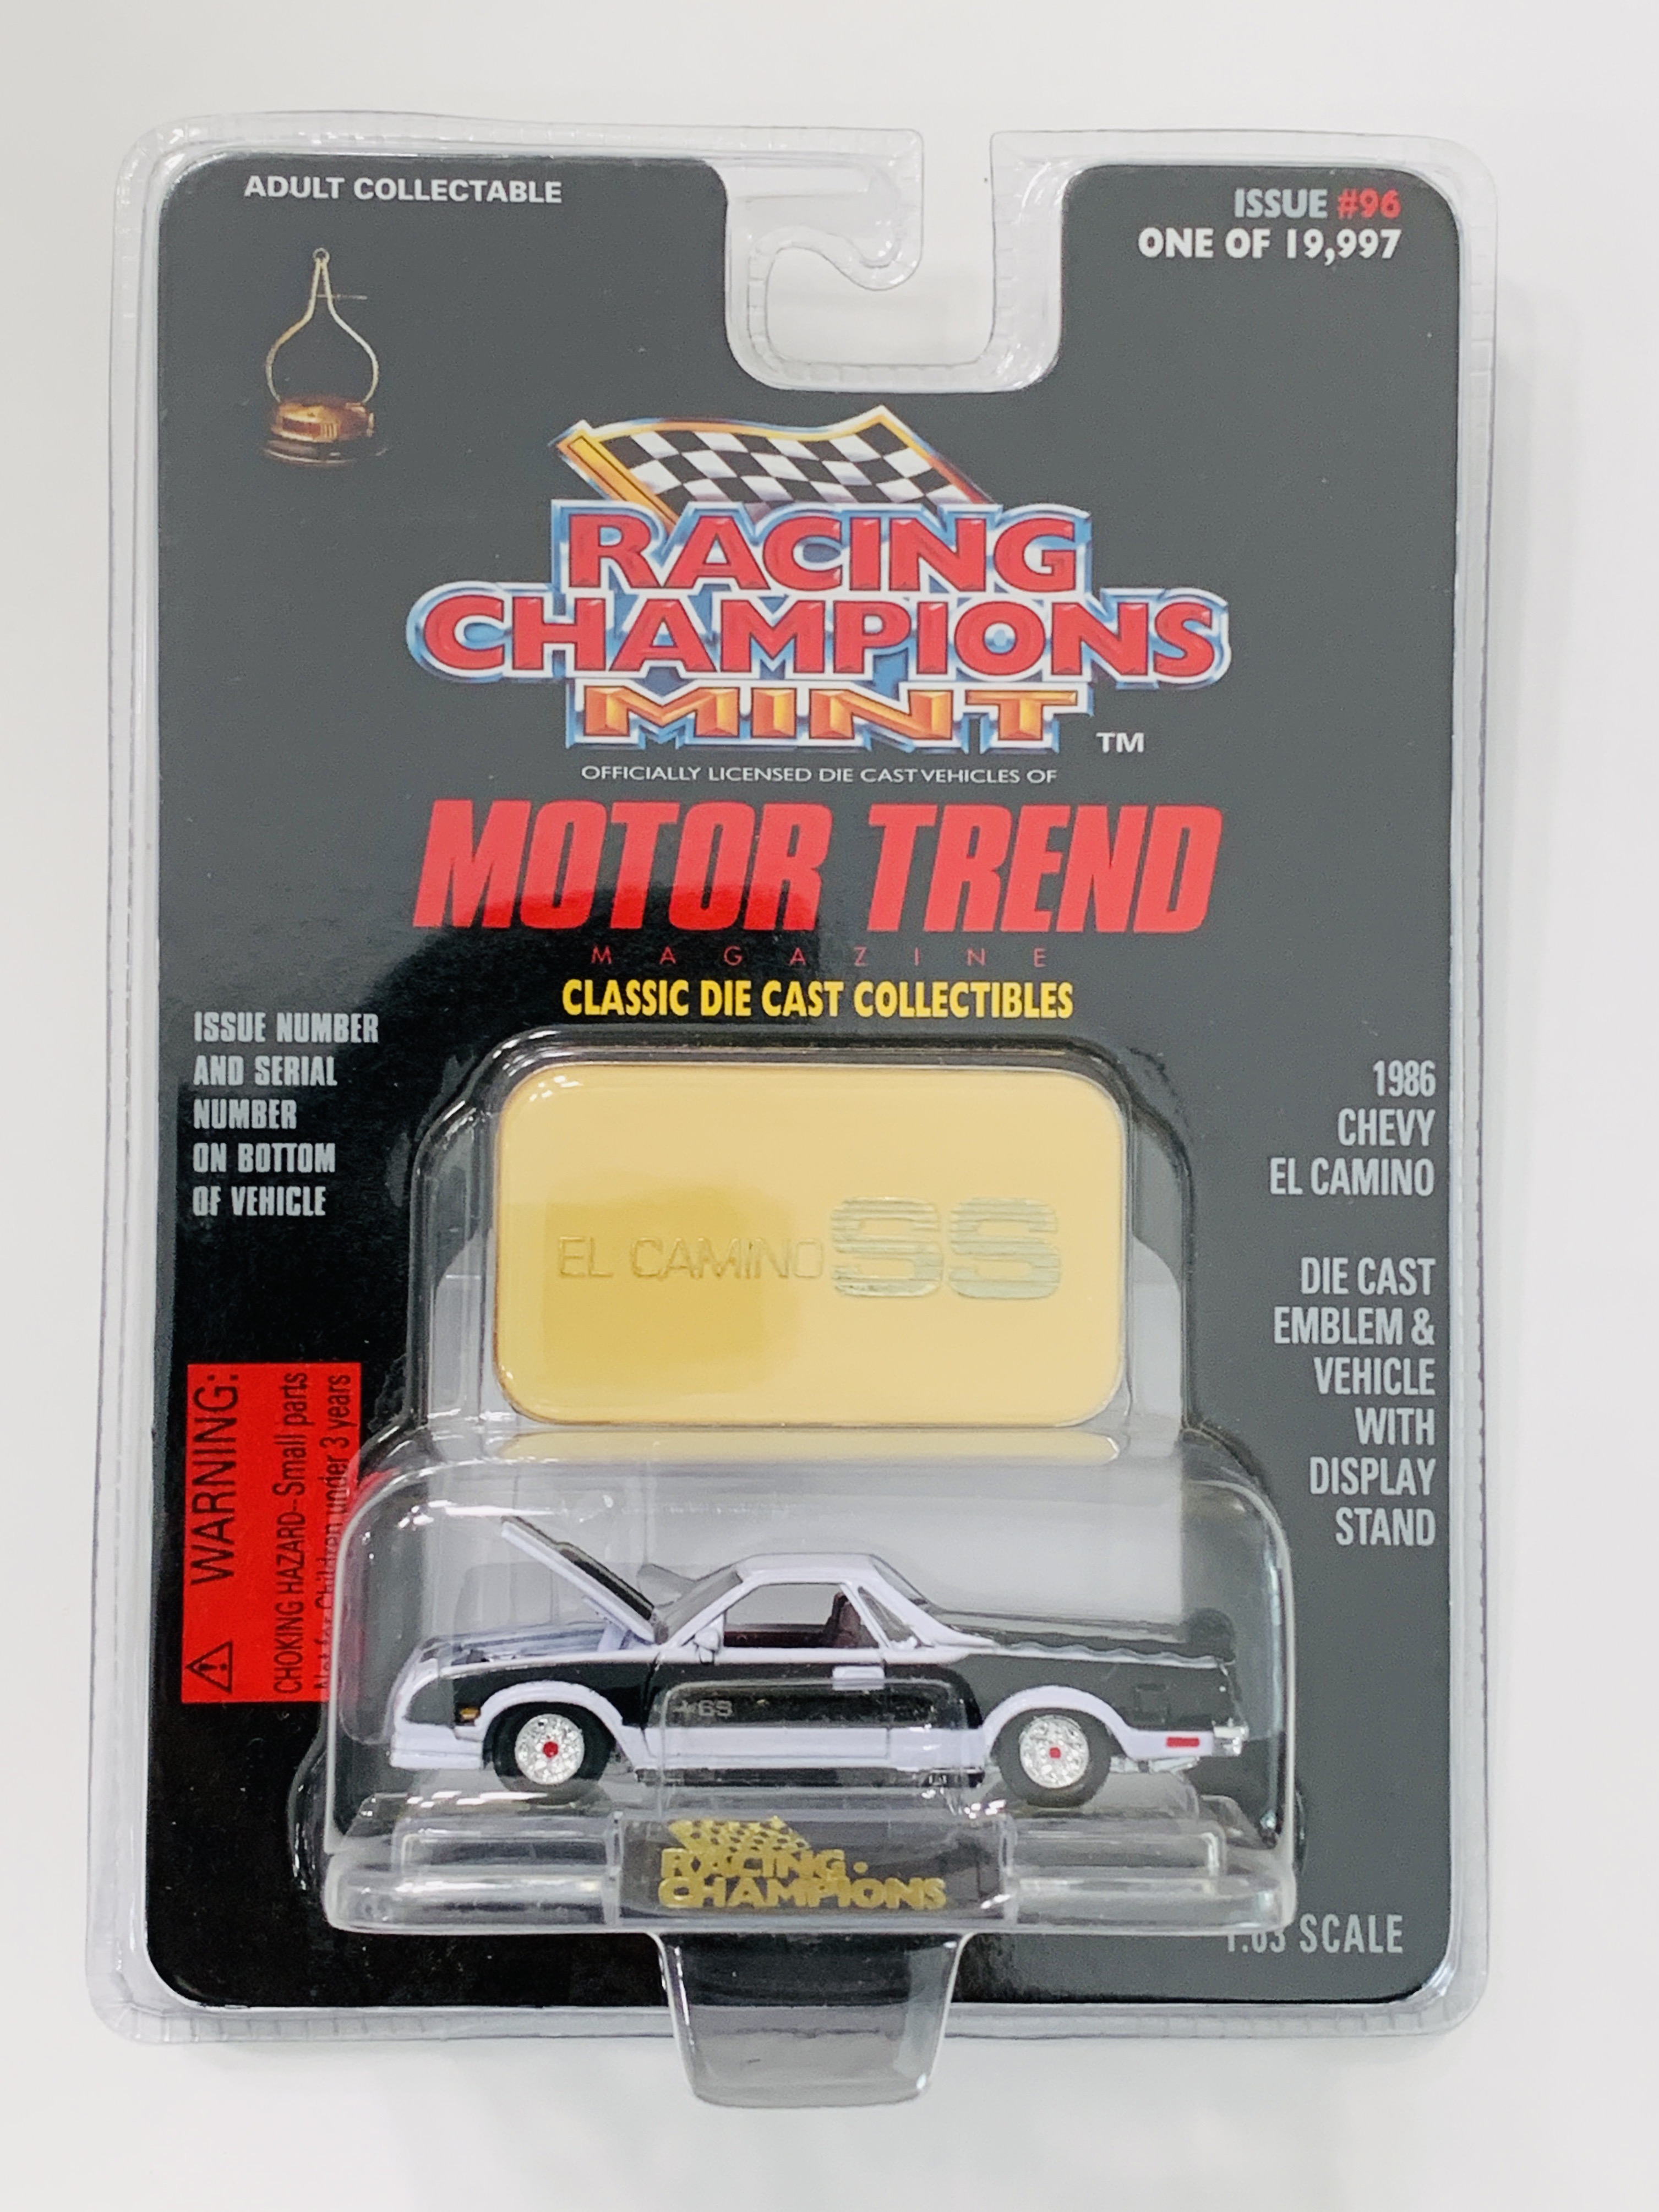 Racing Champions Mint Edition 1986 Chevy El Camino